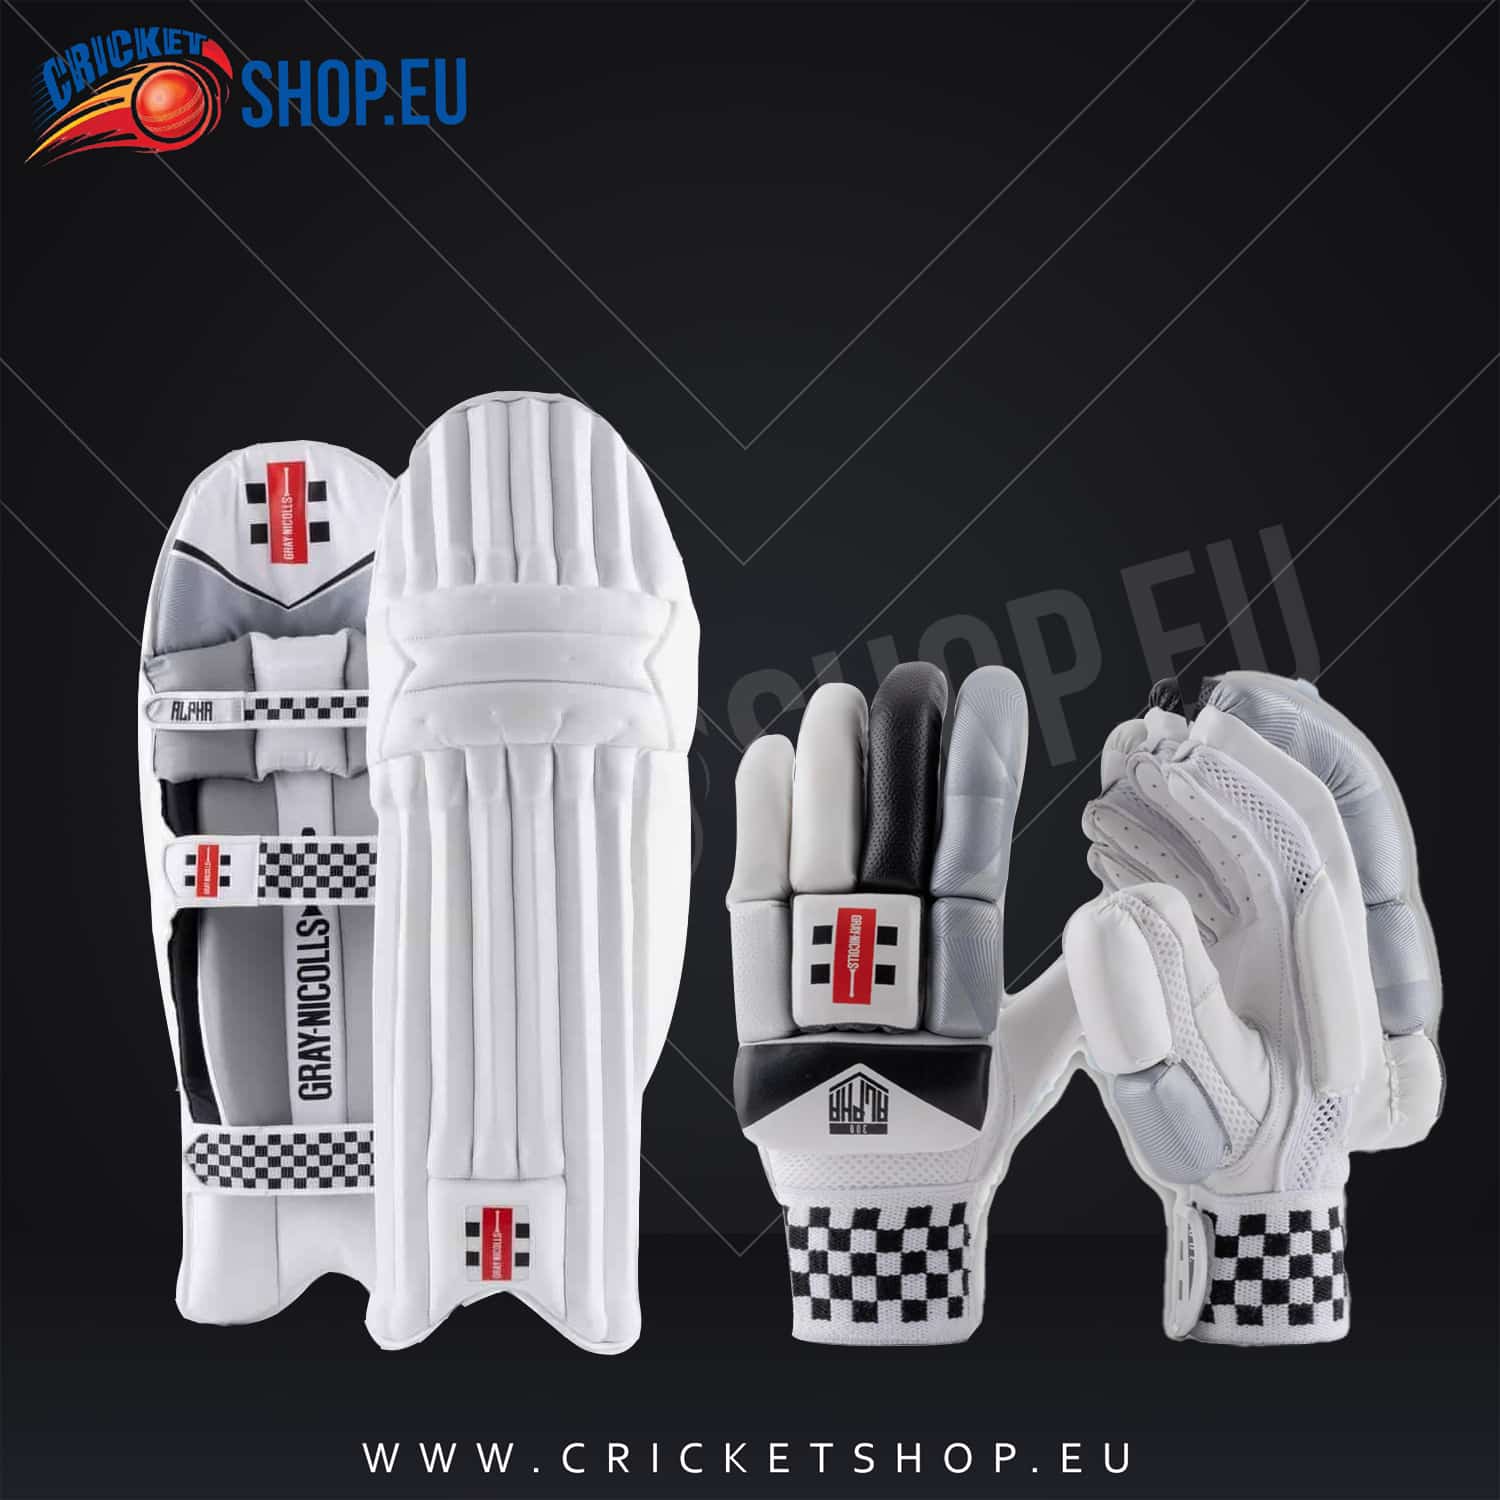 cricket set, batting pads, batting gloves